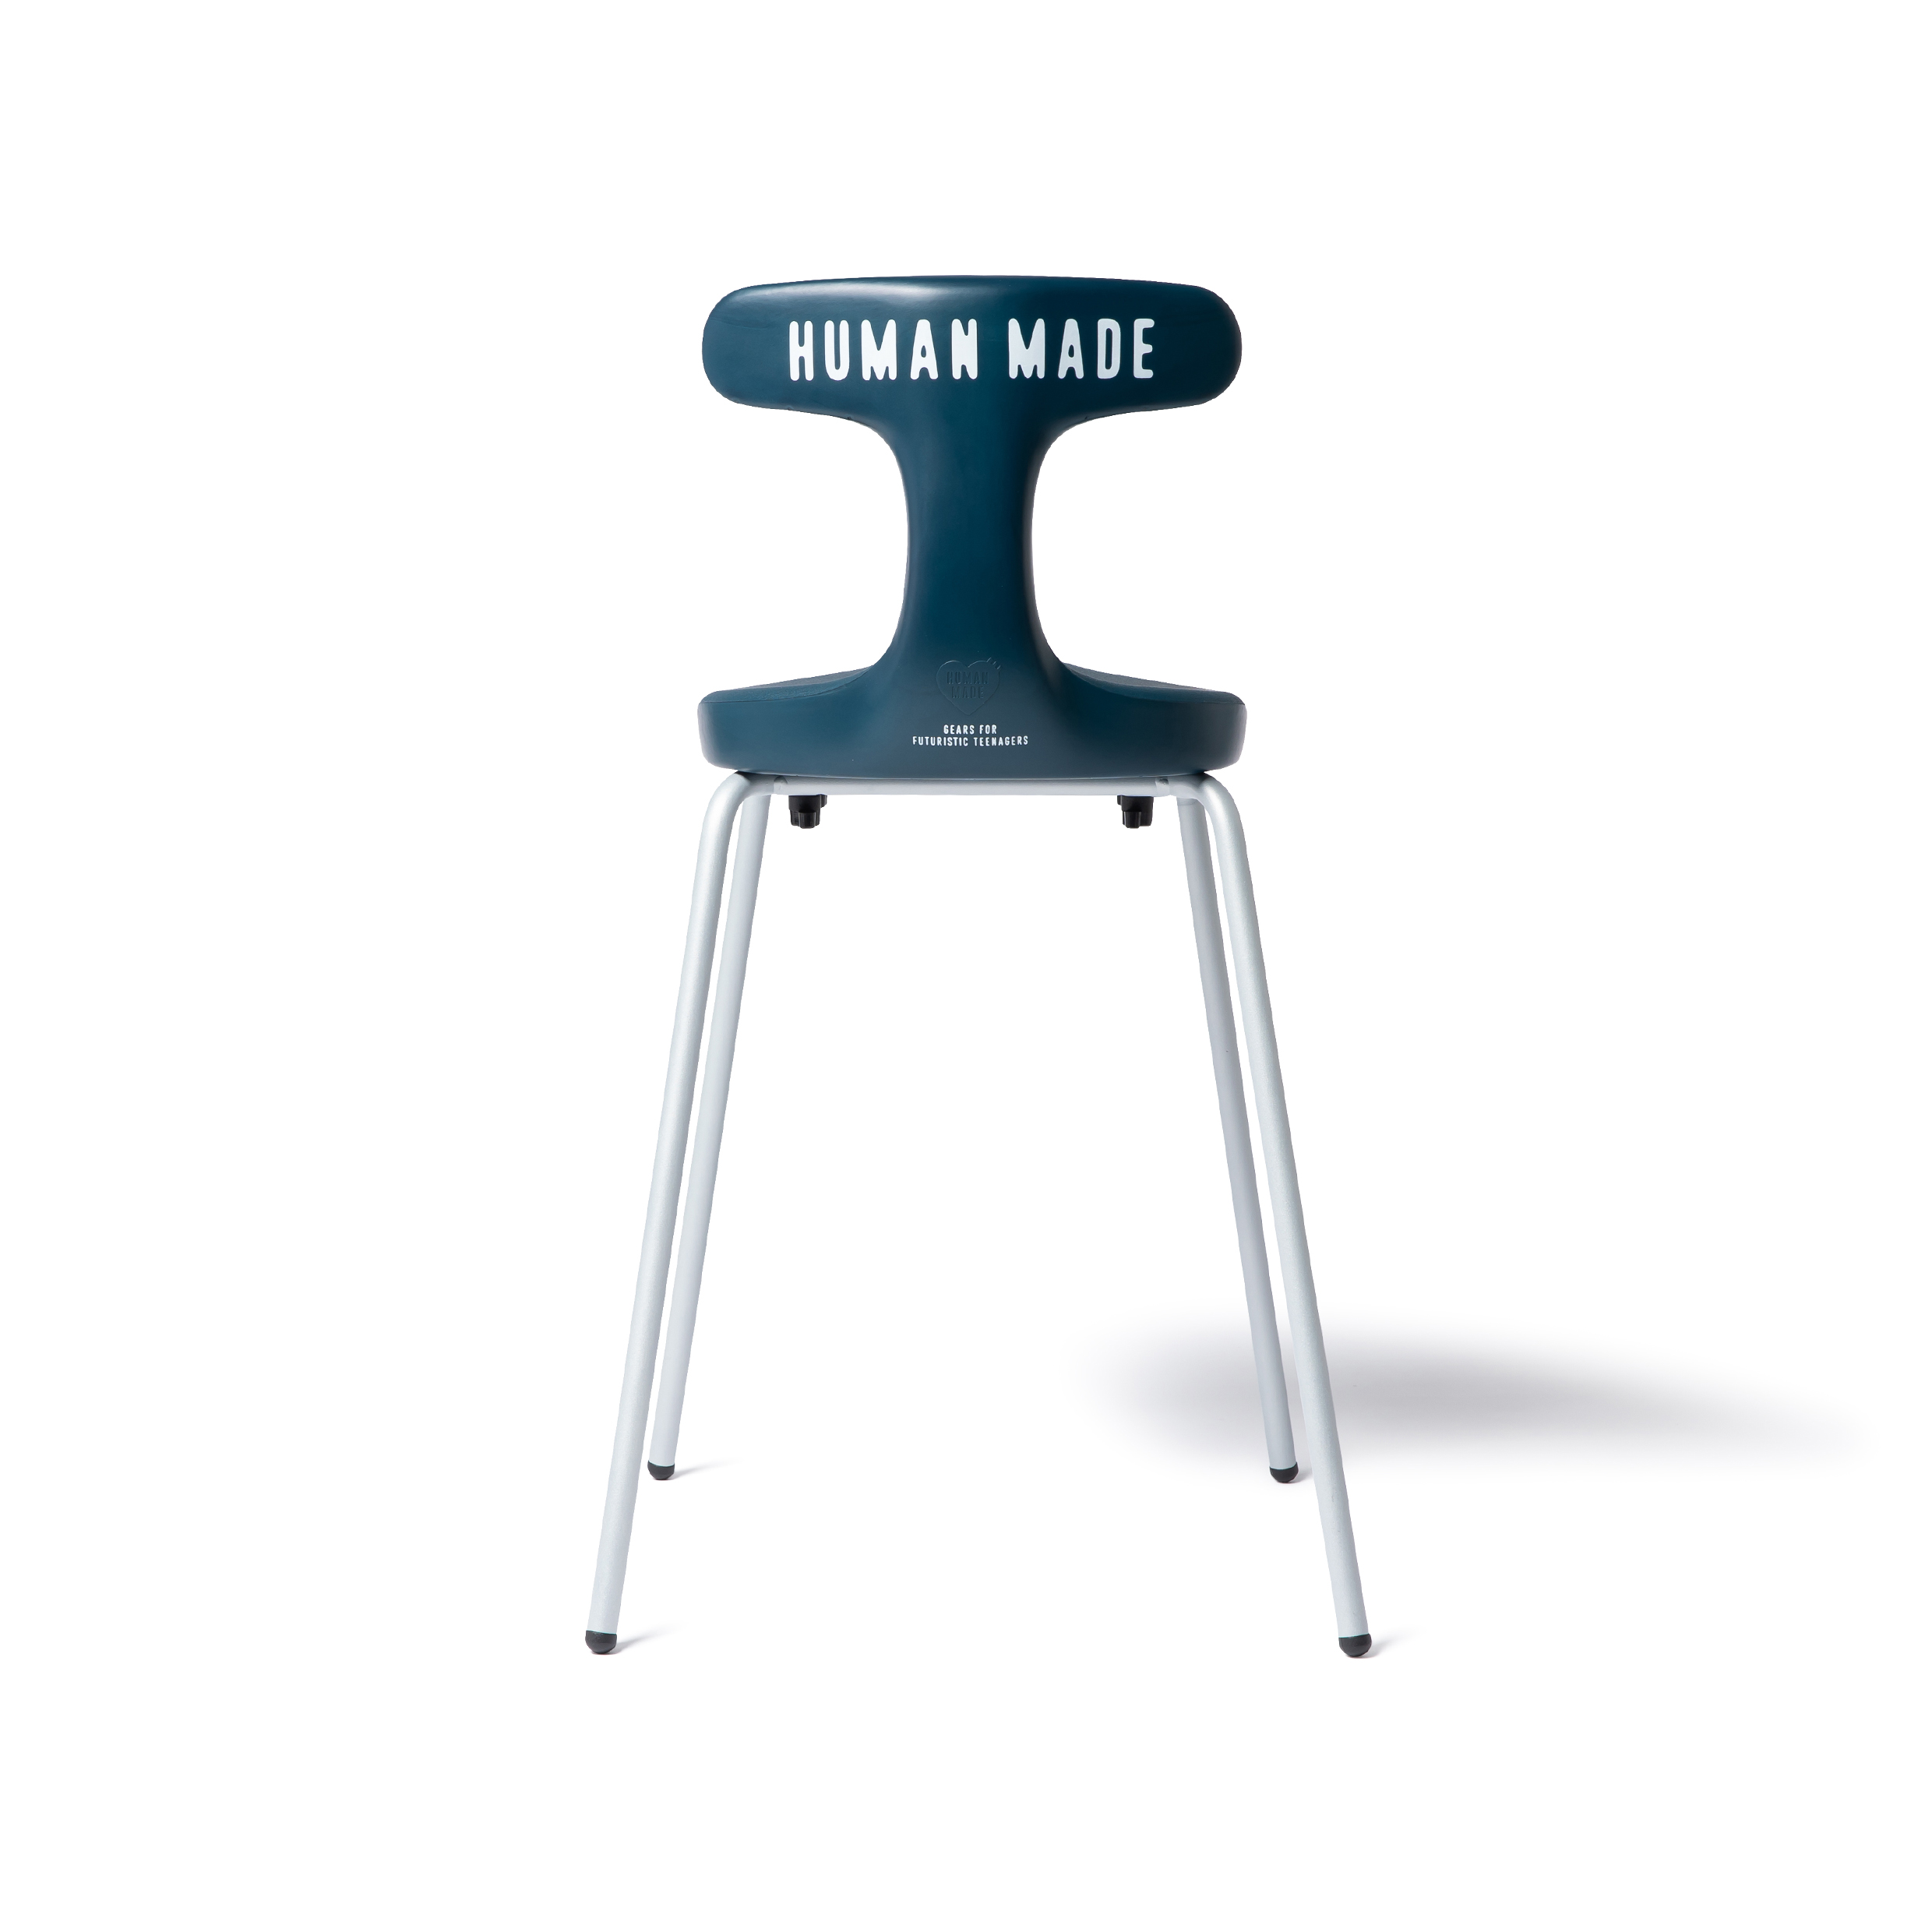 ayur chair x HUMAN MADE コラボレーションアイテム発売のお知らせ | NEWS | OTSUMO CO.,LTD